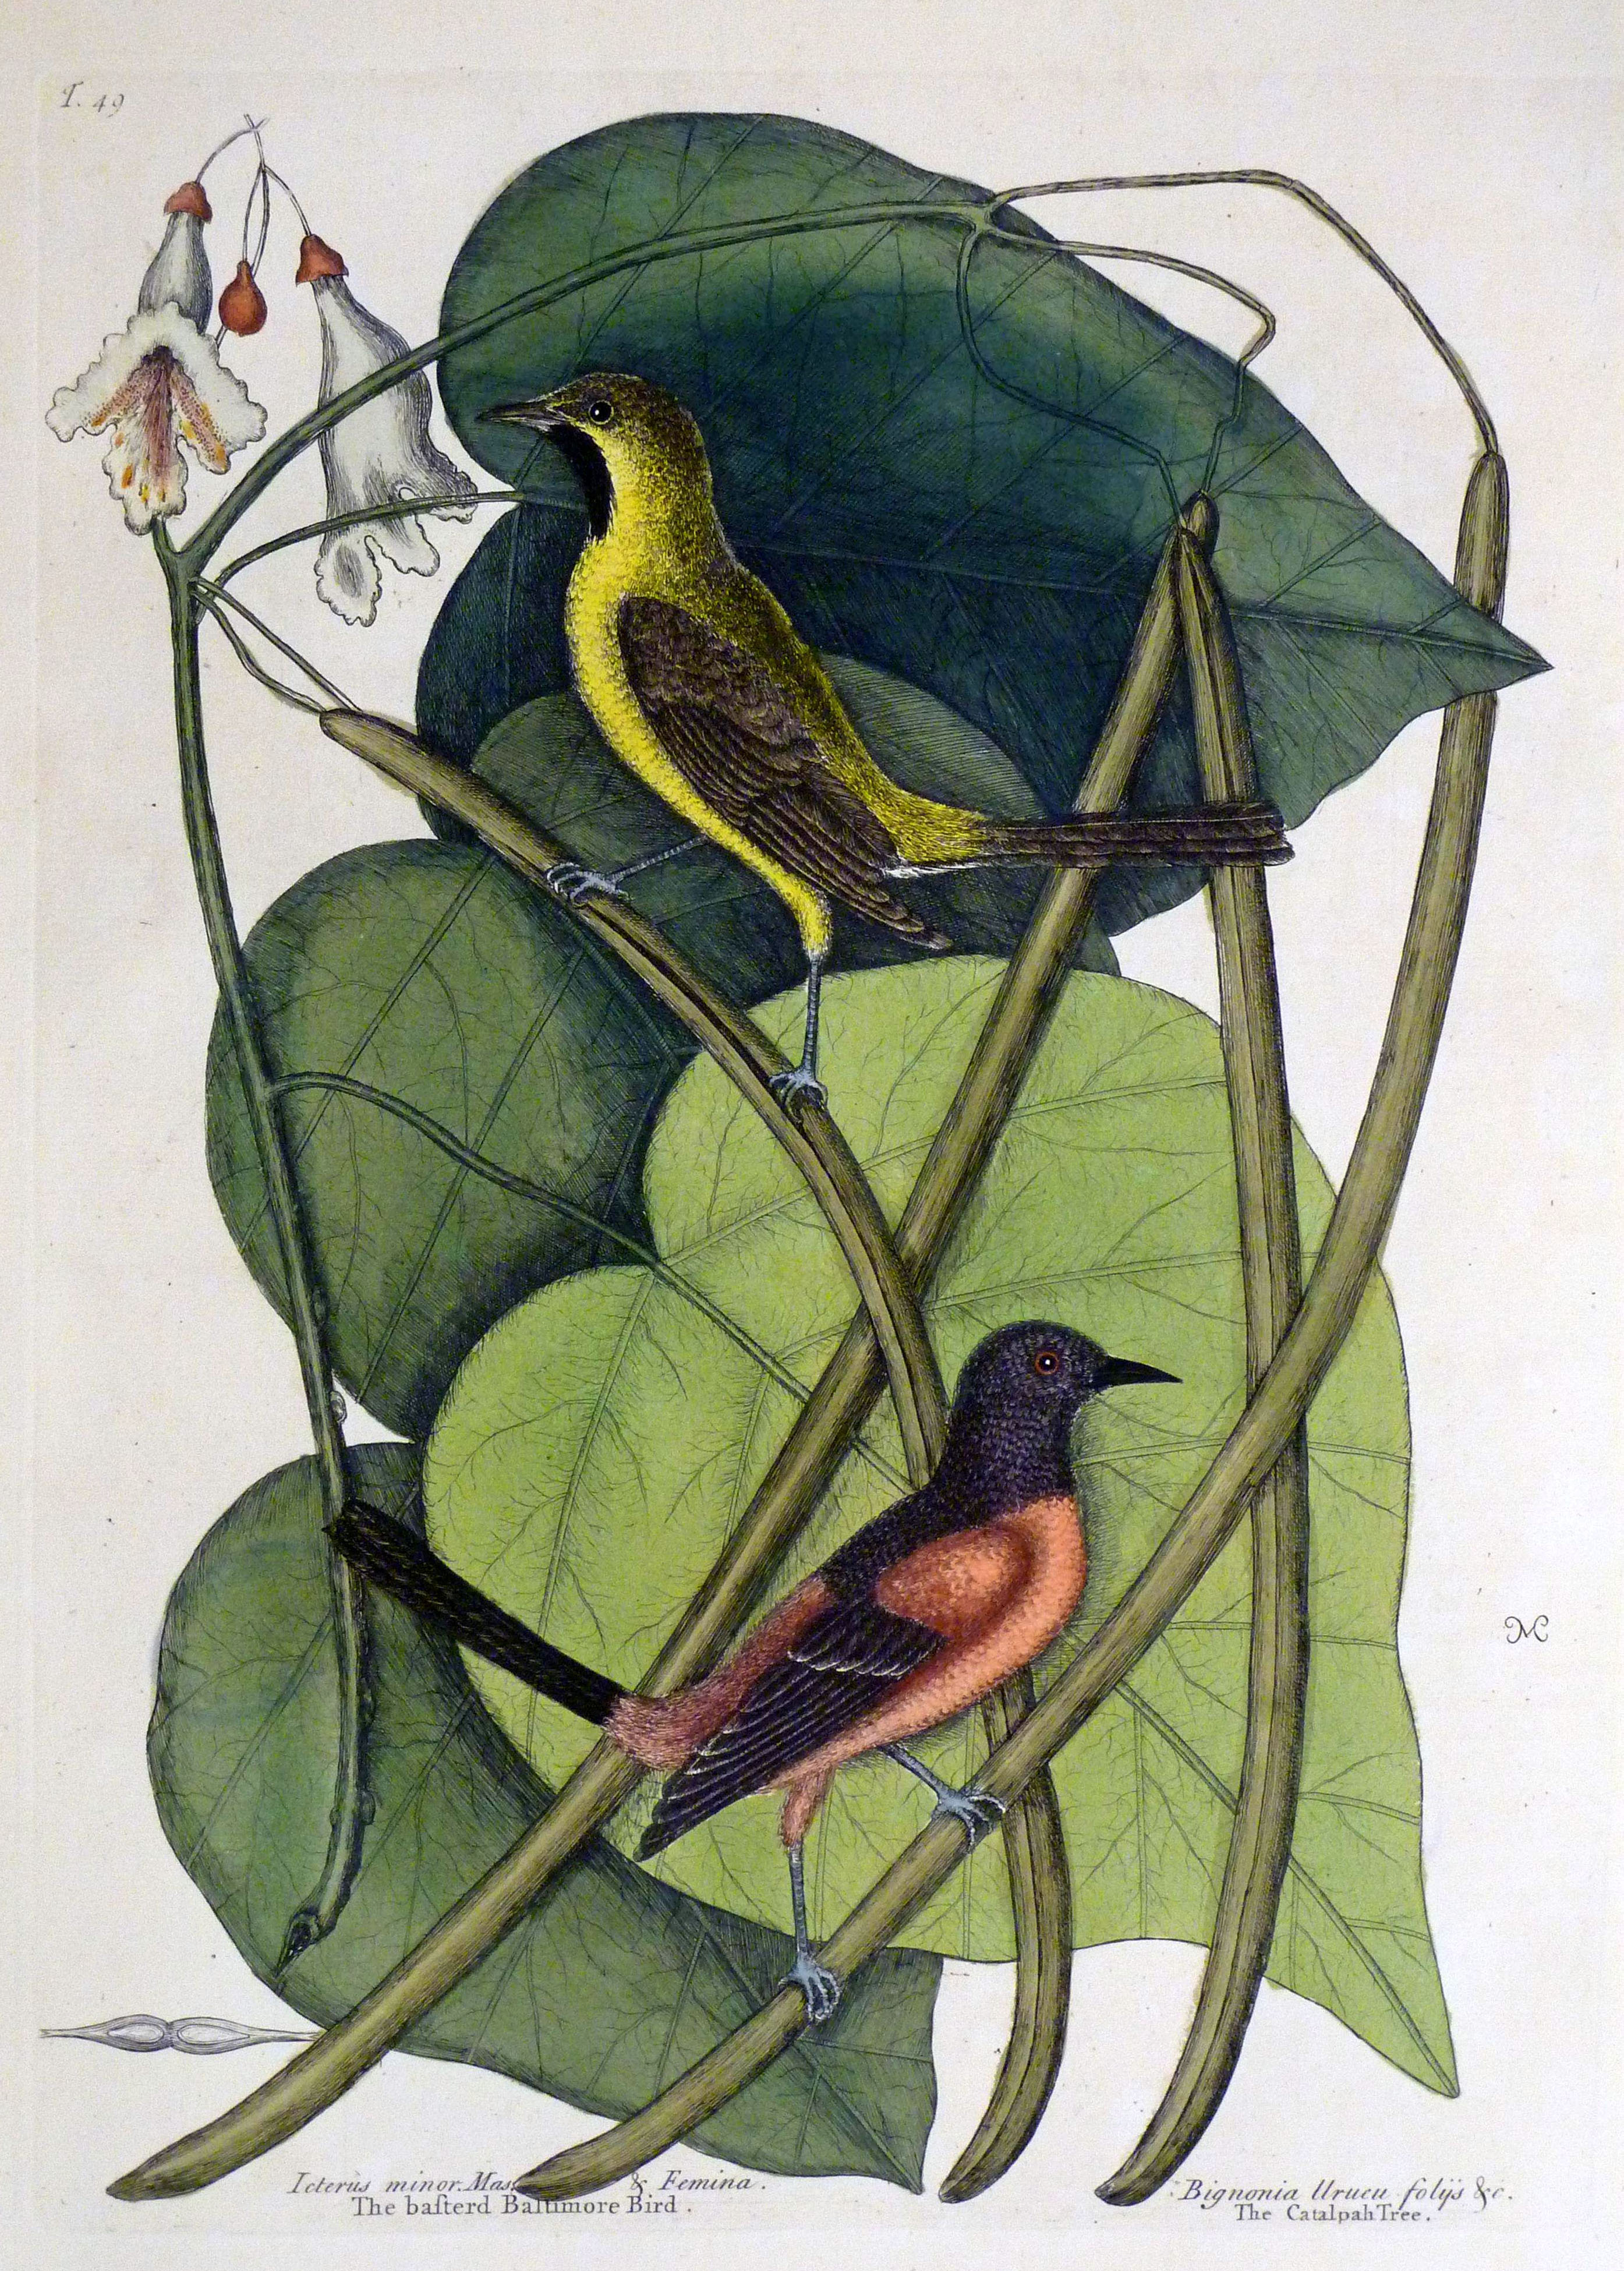 The natural history of Carolina, Florida, and the Bahama Islands, 1754 Icterus minor. Mas. & Femina. Bignonia Urucu folijs &c. - The Basterd Baltimore Bird (19740415945)